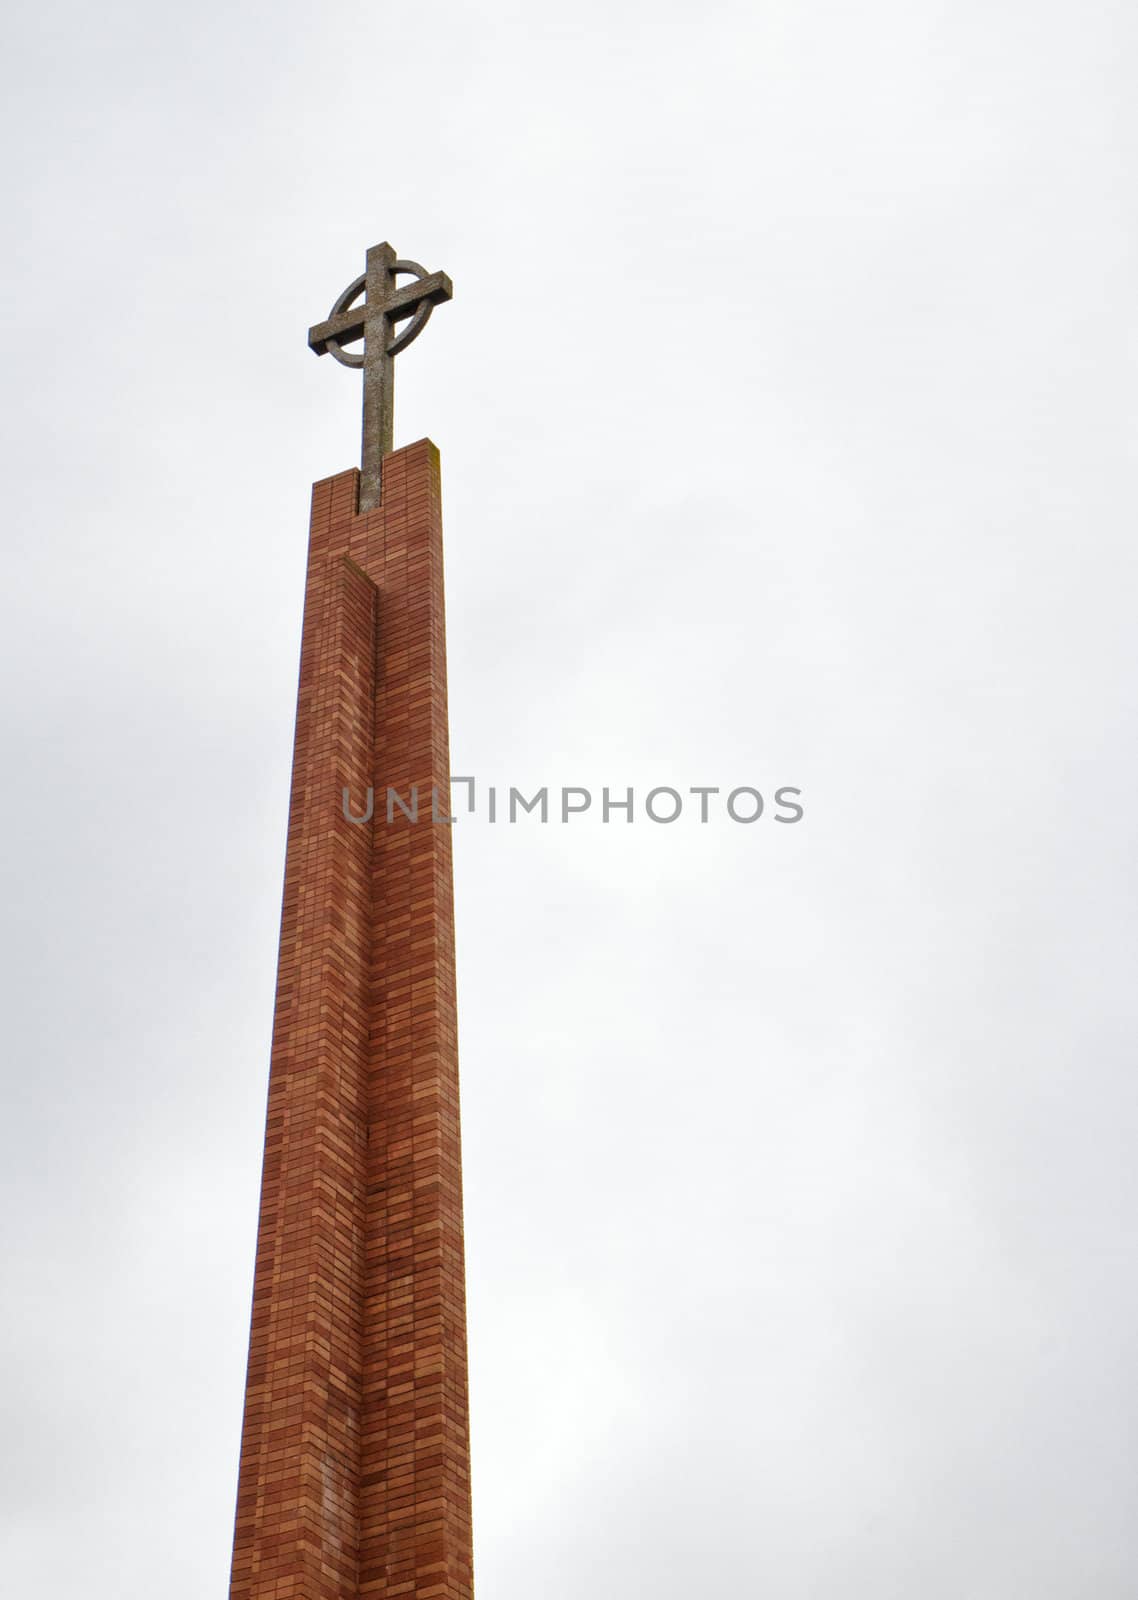 Cross brick tower by bobkeenan